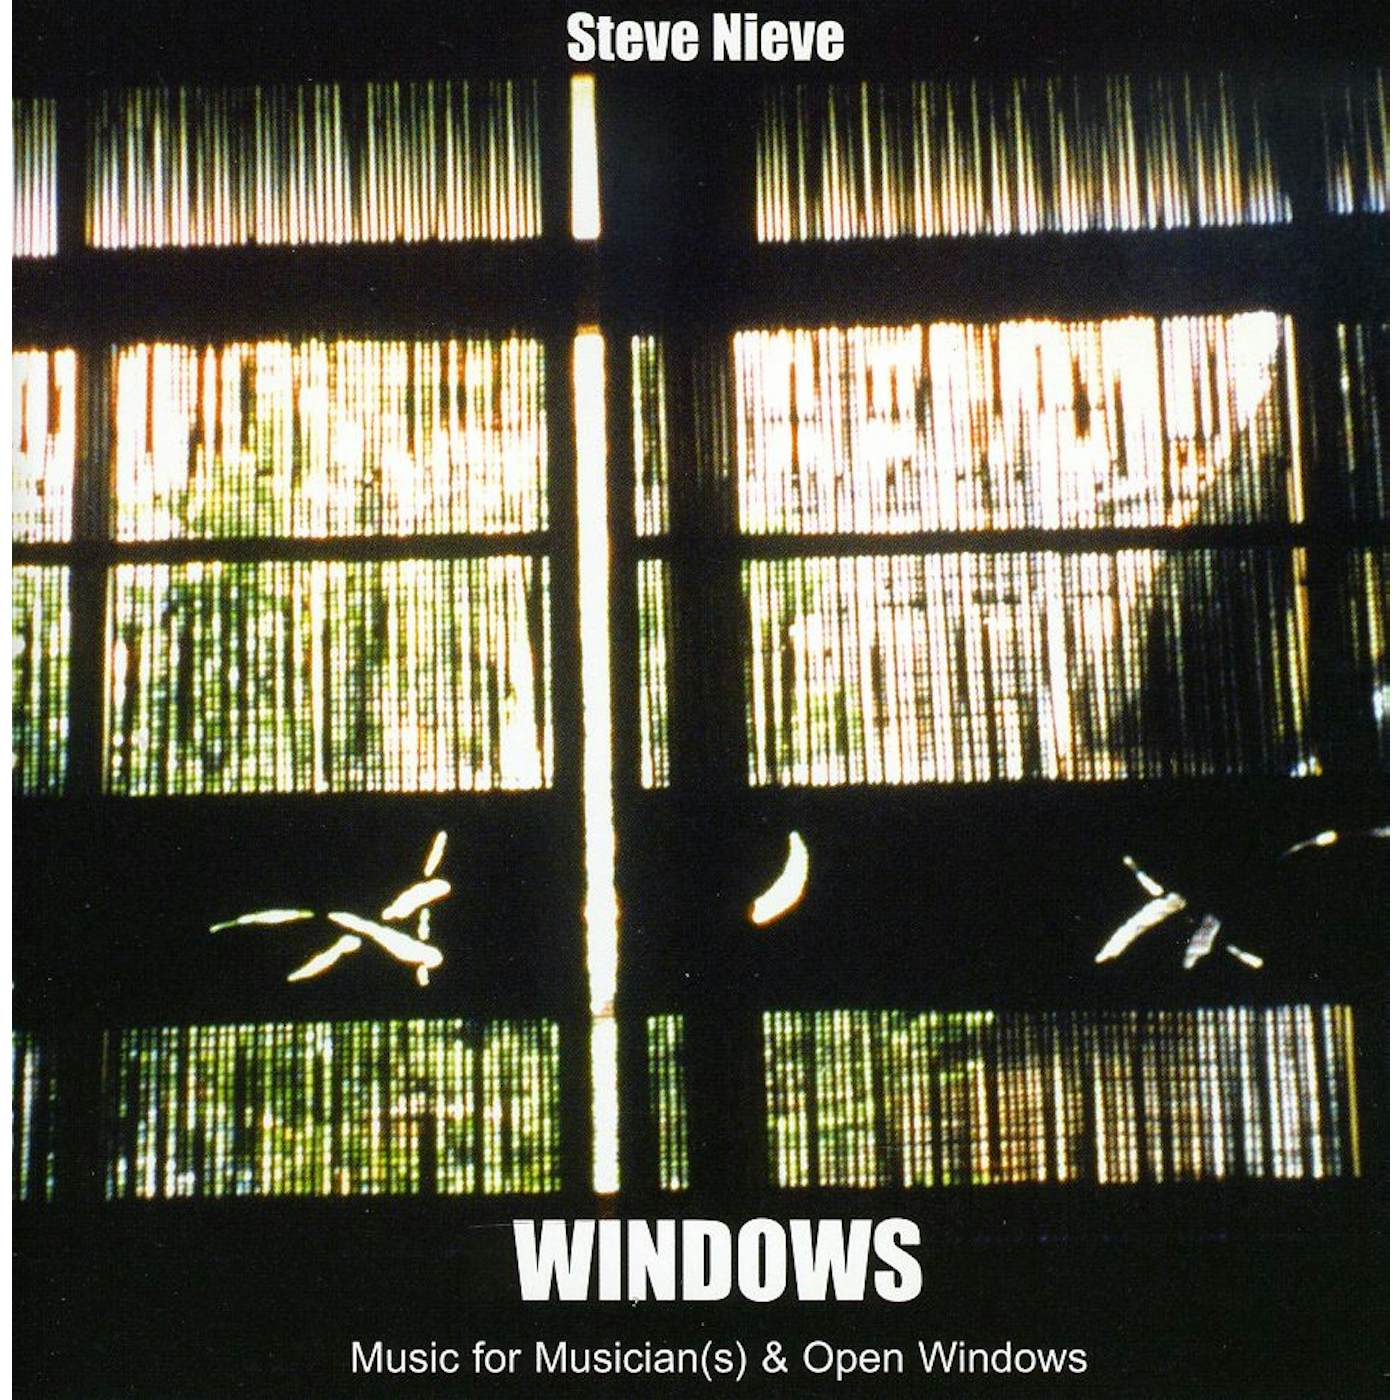 Steve Nieve WINDOWS CD